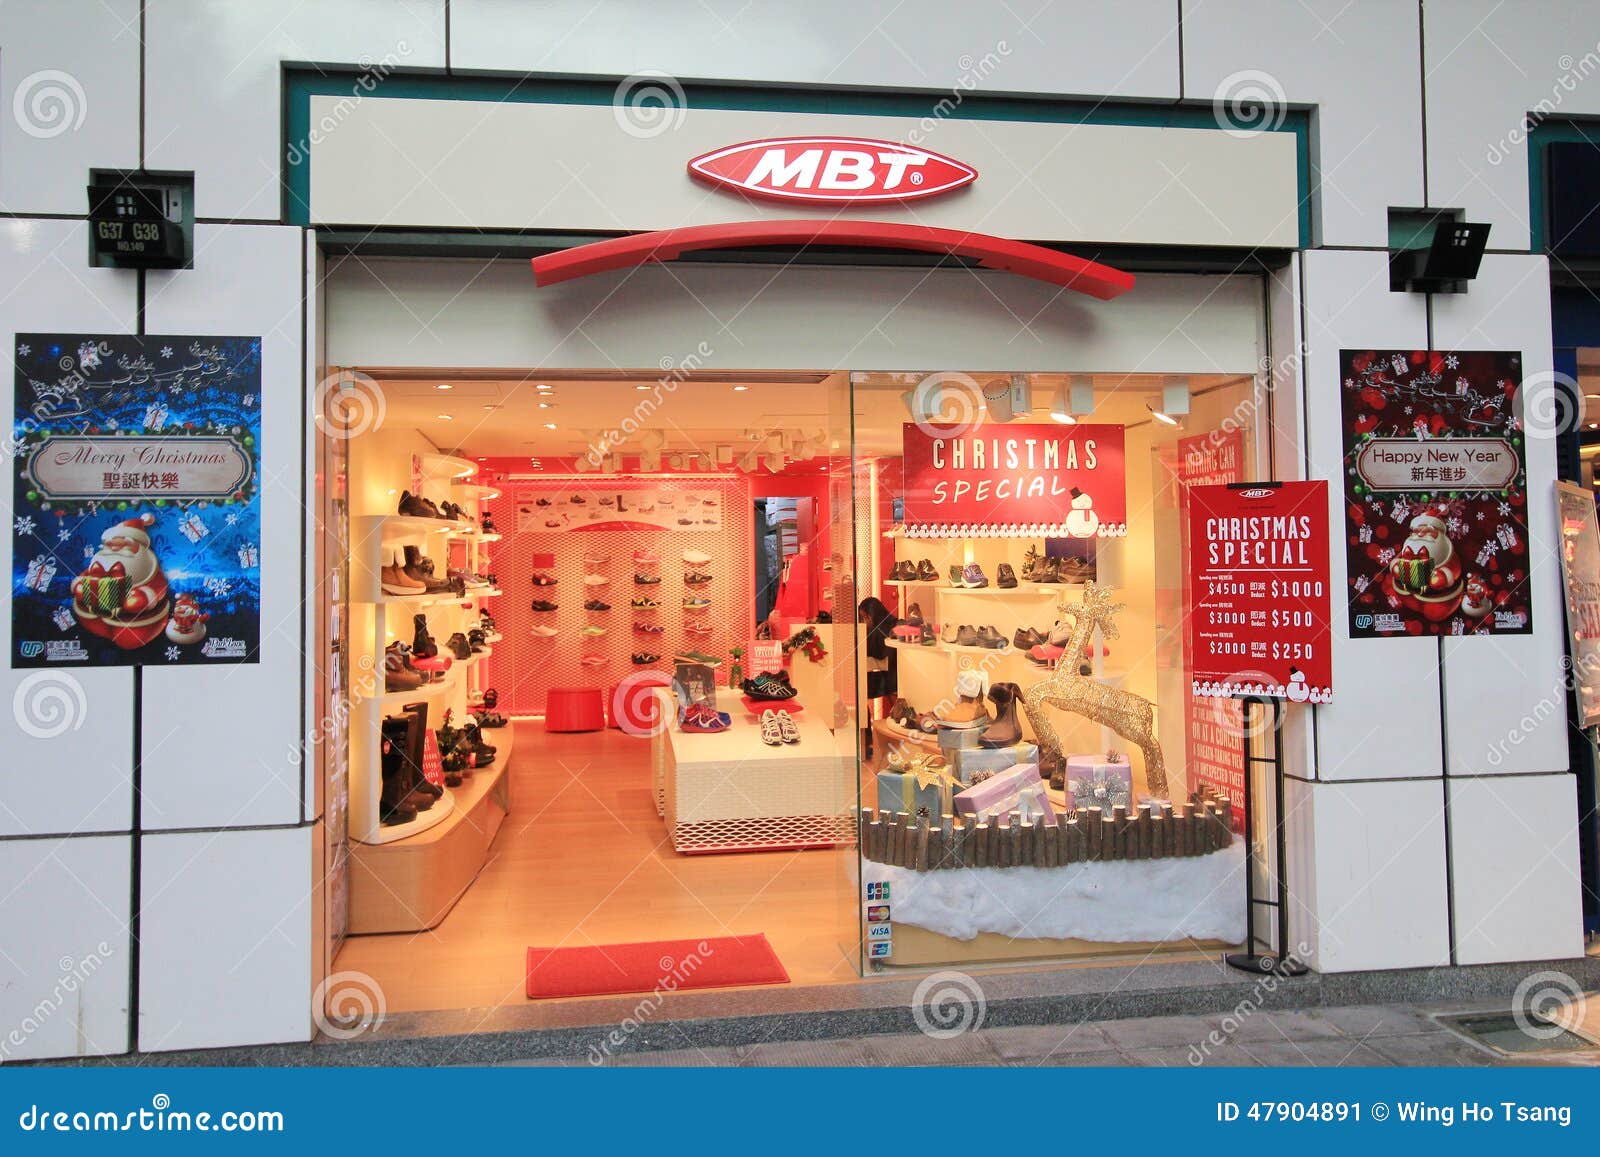 Mbt shop in hong kong editorial photo. Image of -